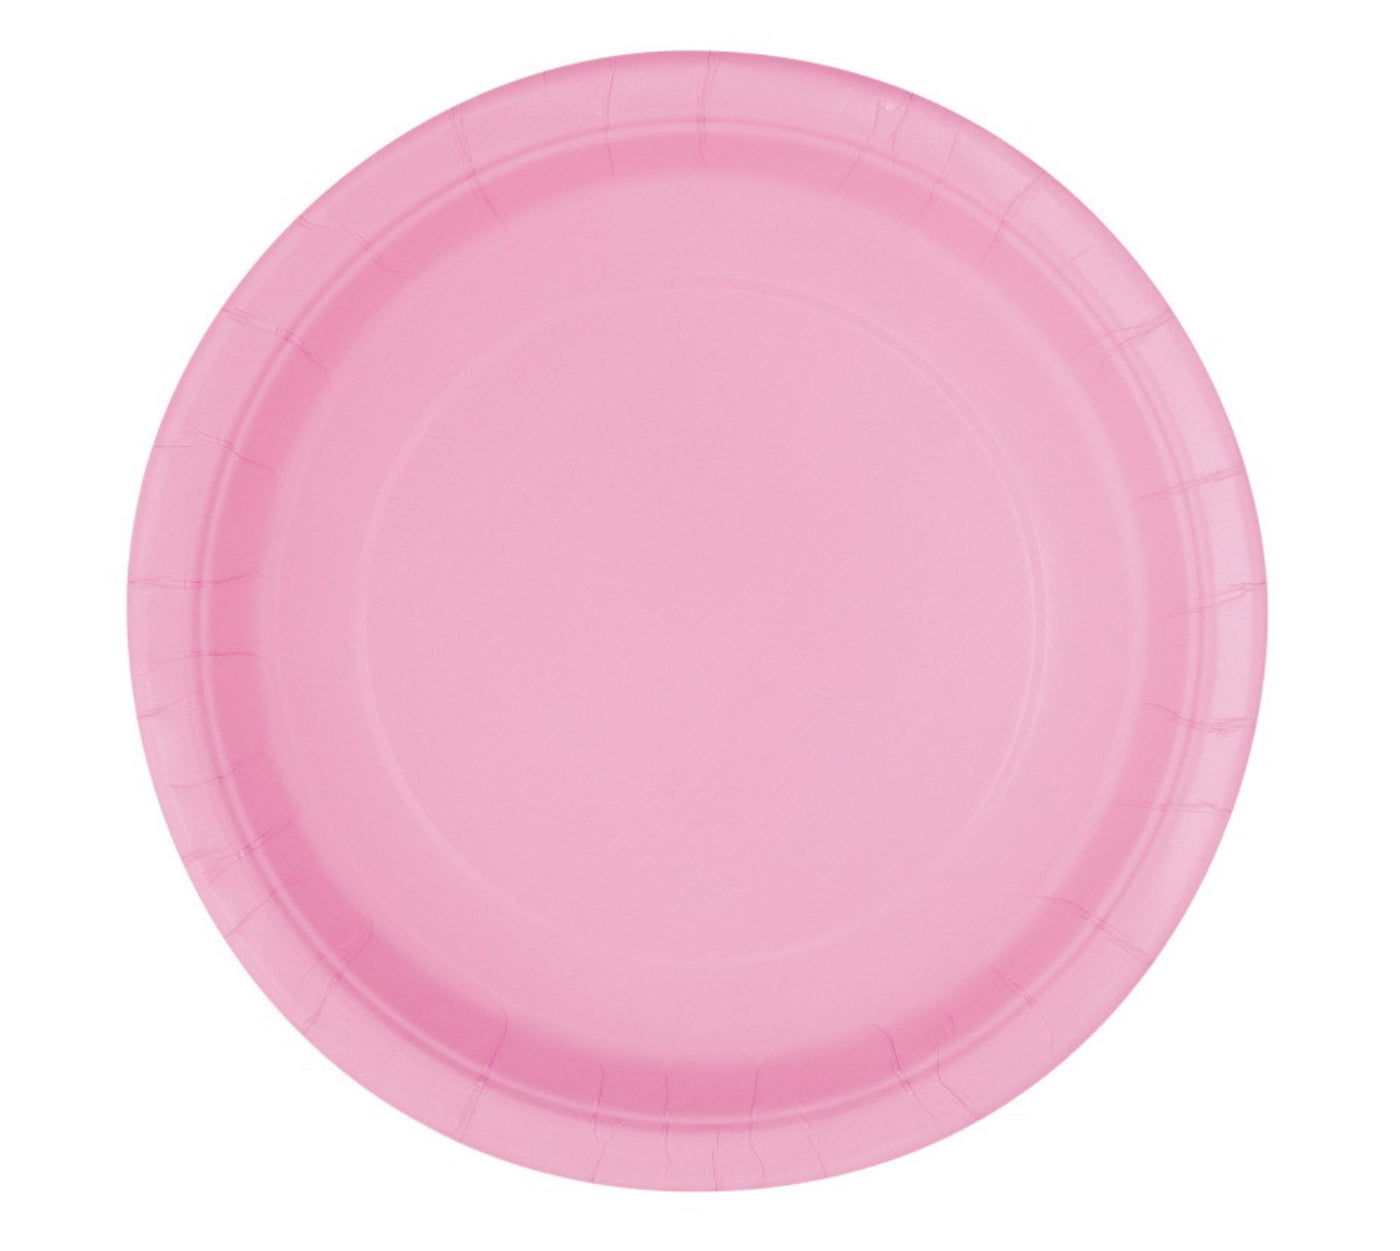 Light Pink Dinner Plates 8ct